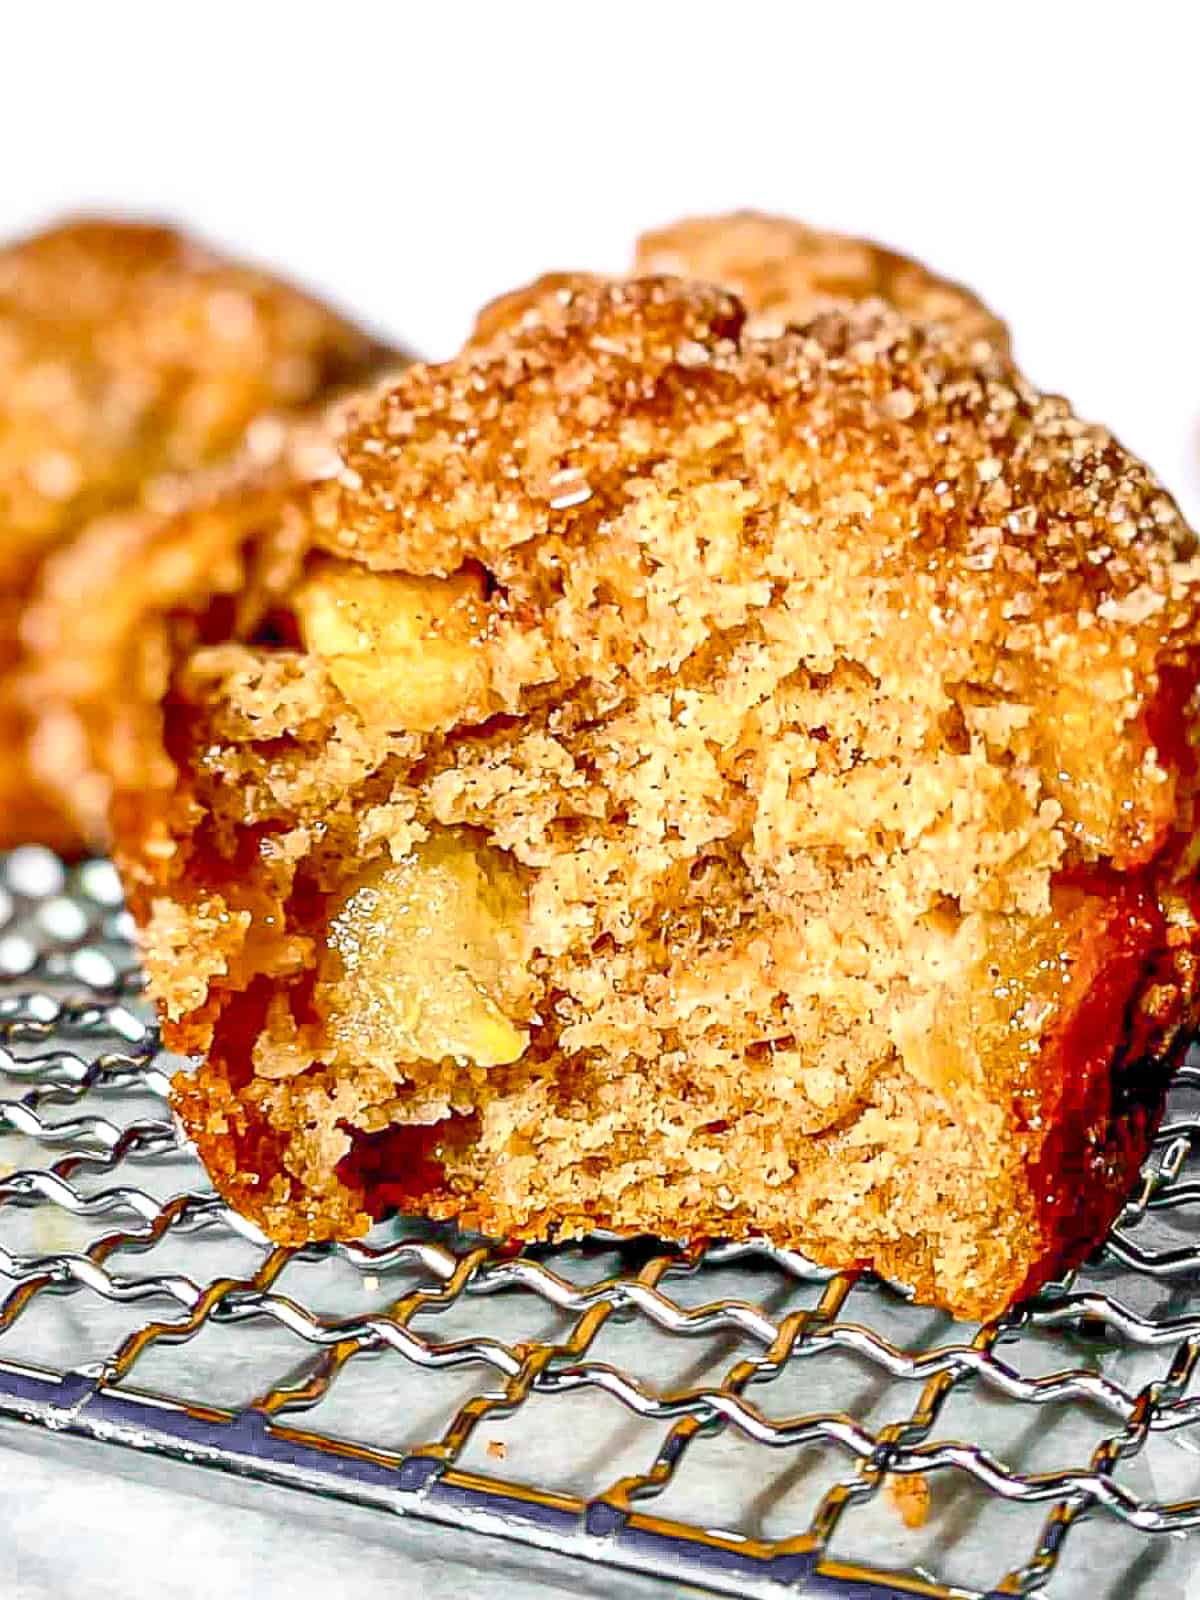 Apple cinnamon crunch muffins on a wire rack.